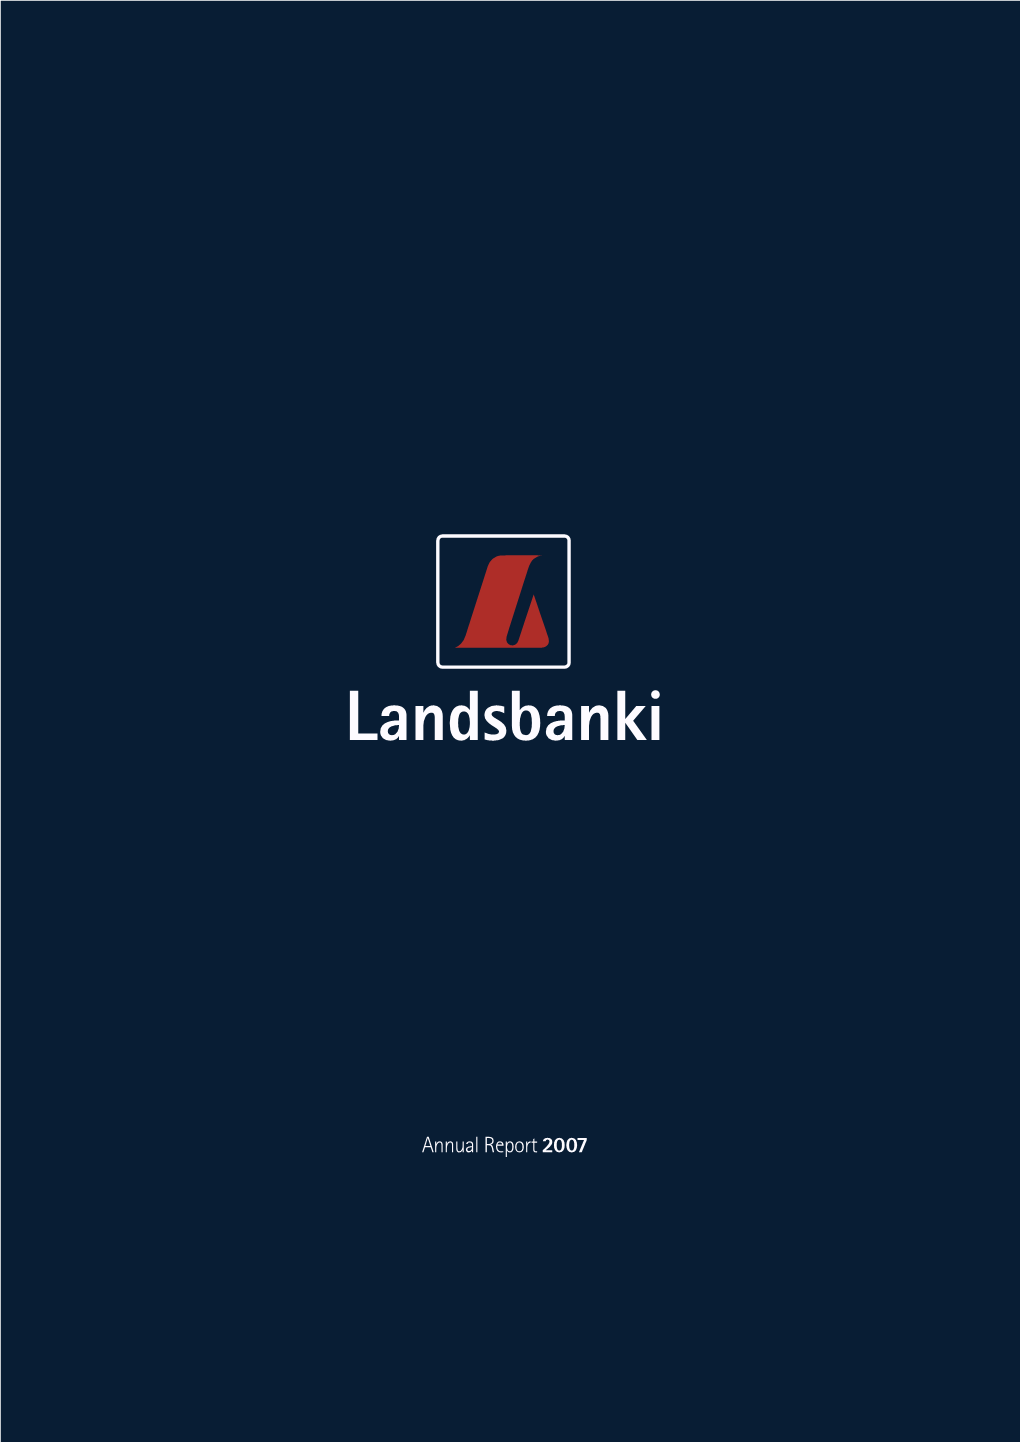 Landsbanki Annual Report 2007.Pdf